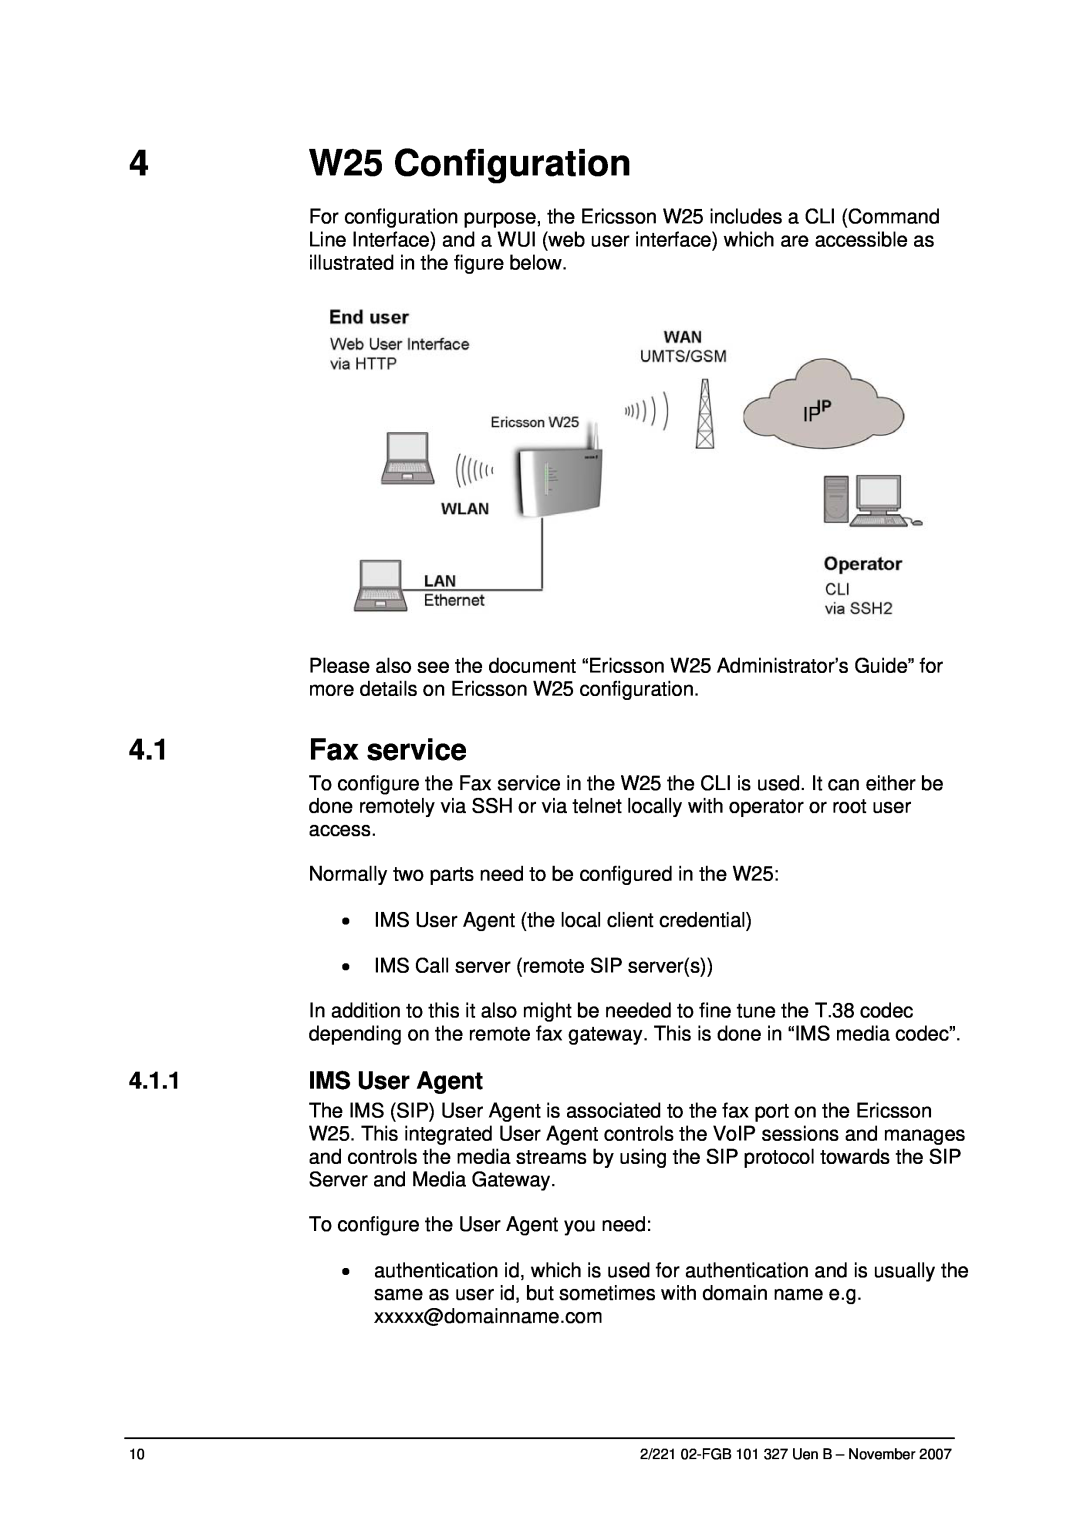 Compaq manual 4 W25 Configuration, Fax service, 4.1.1, IMS User Agent 